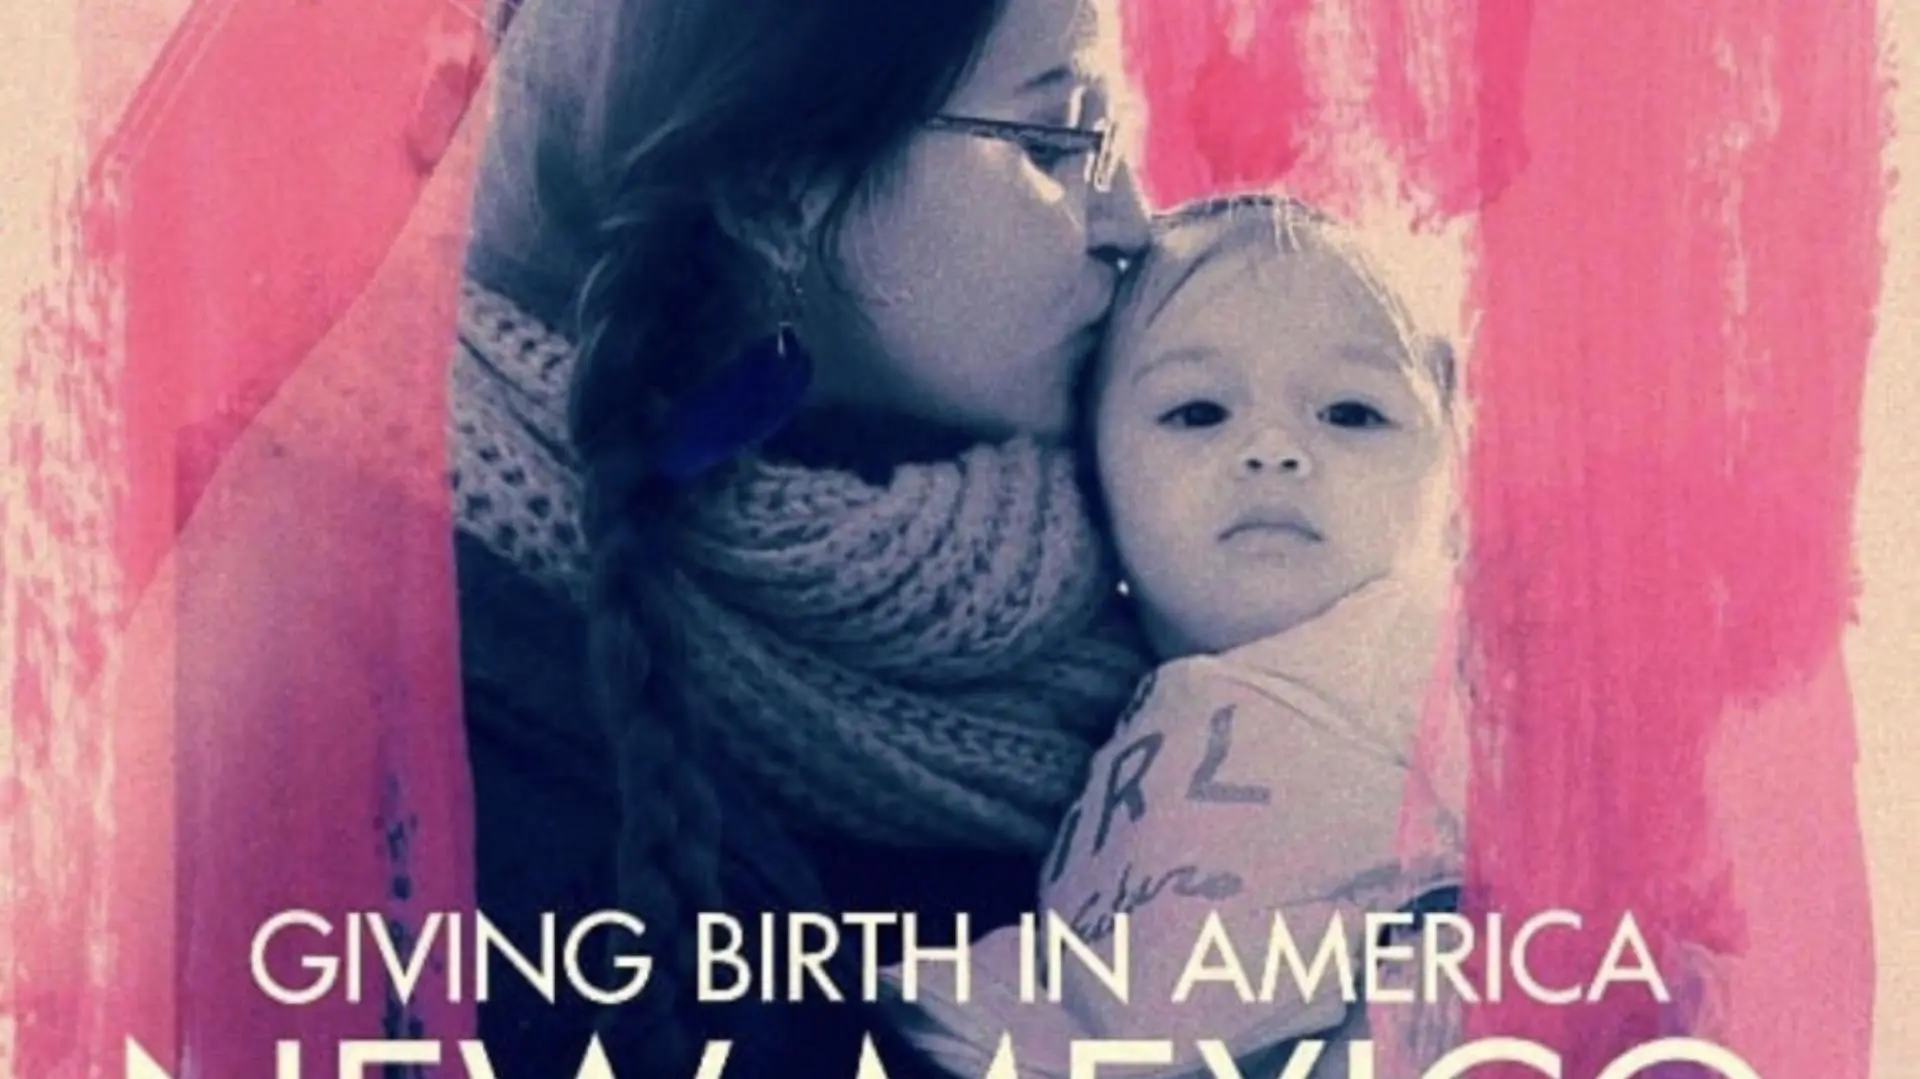 Giving Birth in America: New Mexico_peliplat